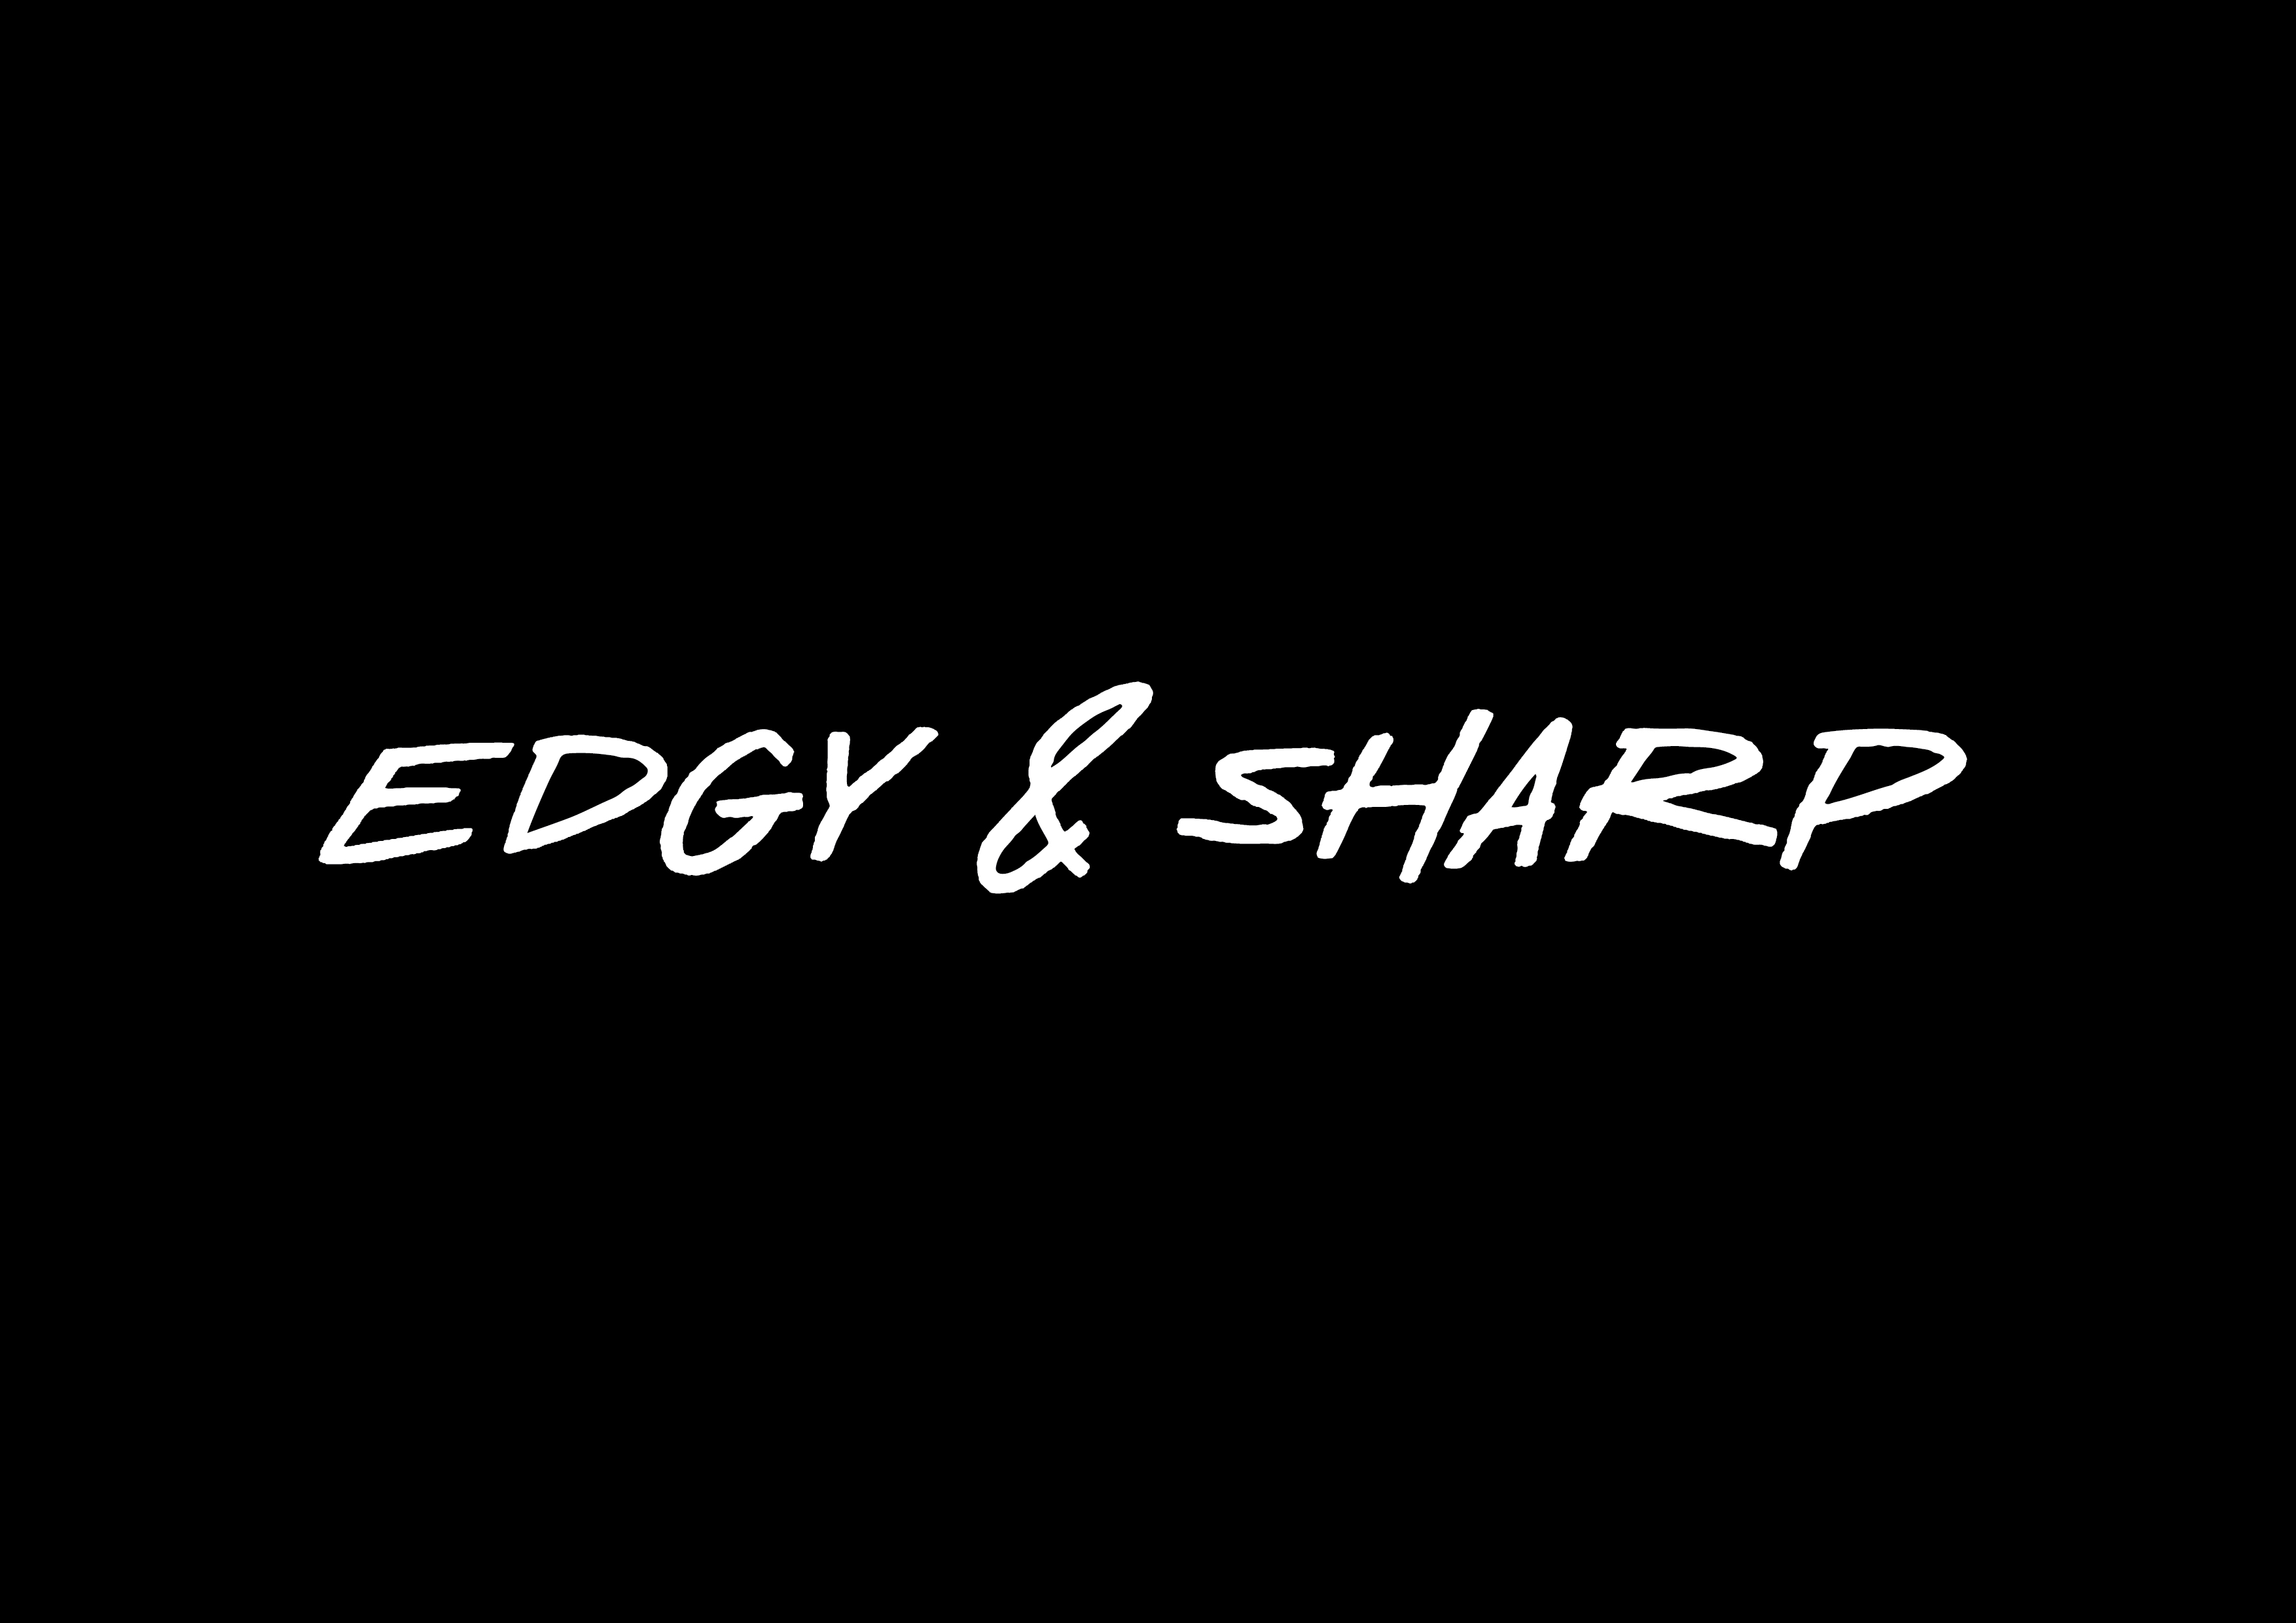 Edgy & Sharp